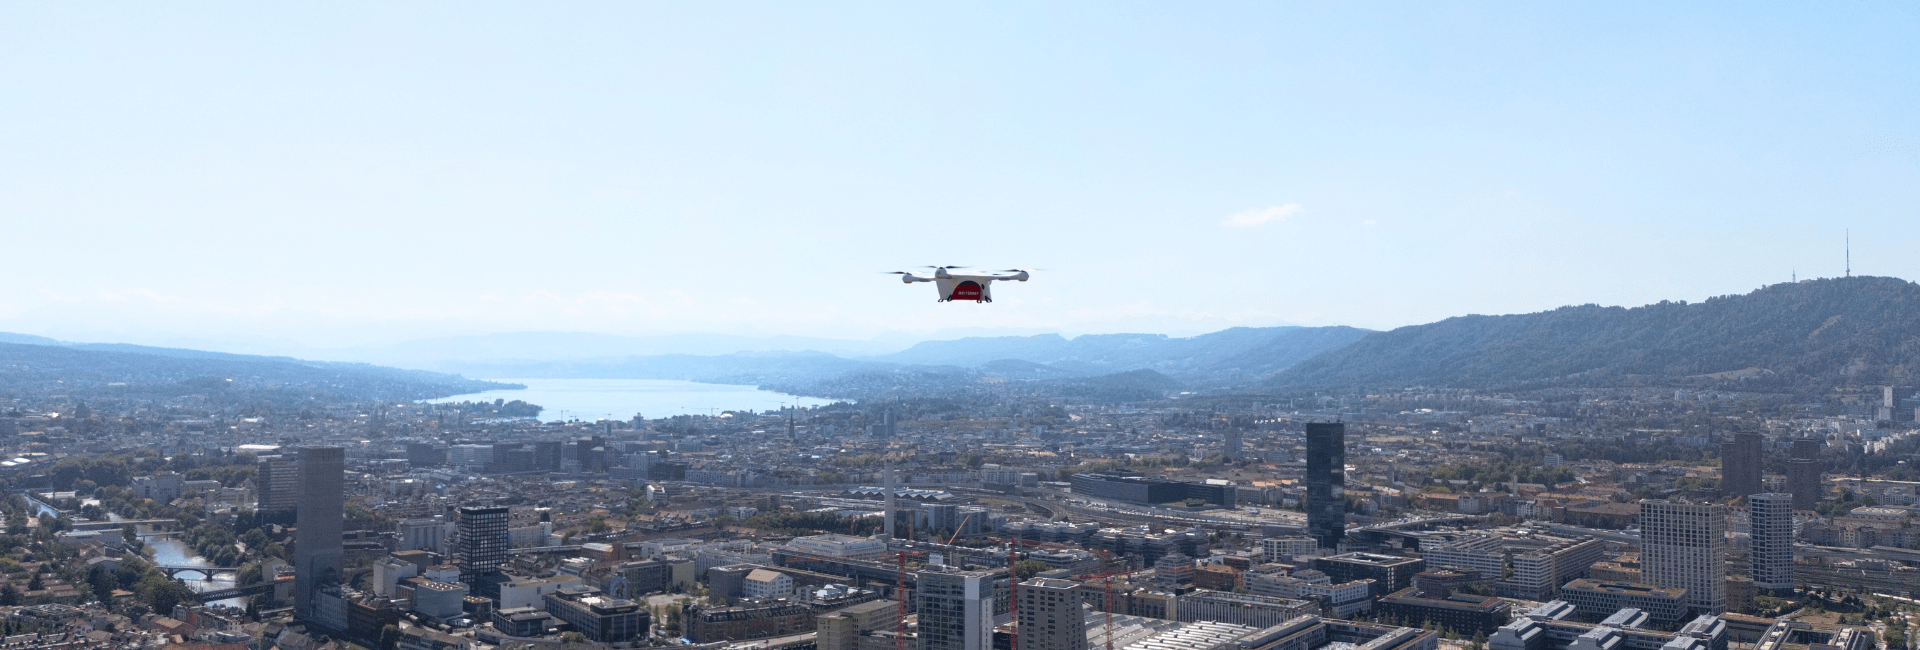 Matternet runs the world's longest urban drone route over Zurich